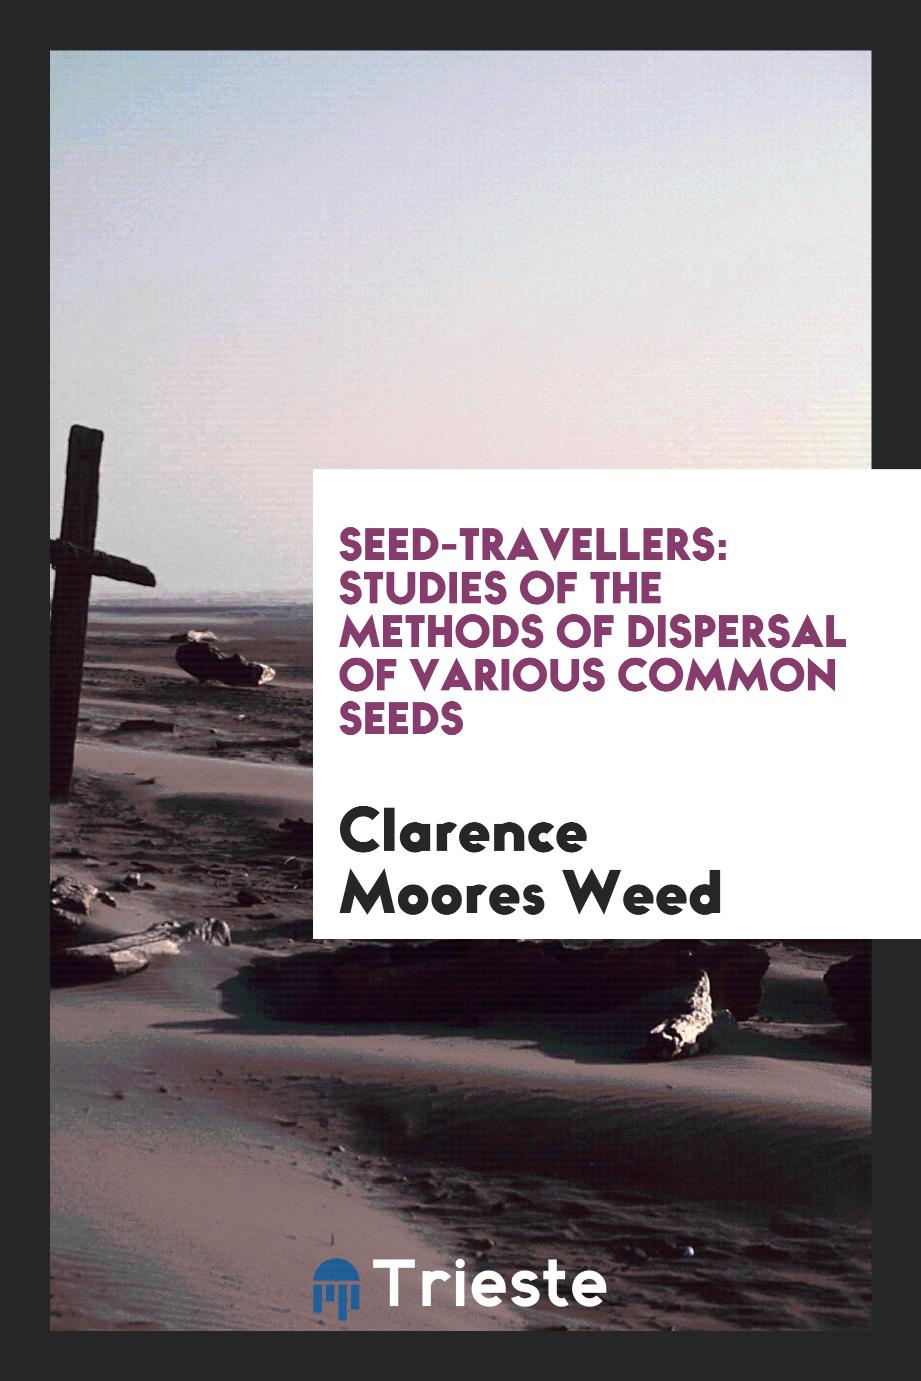 Seed-travellers: Studies of the Methods of Dispersal of Various Common Seeds